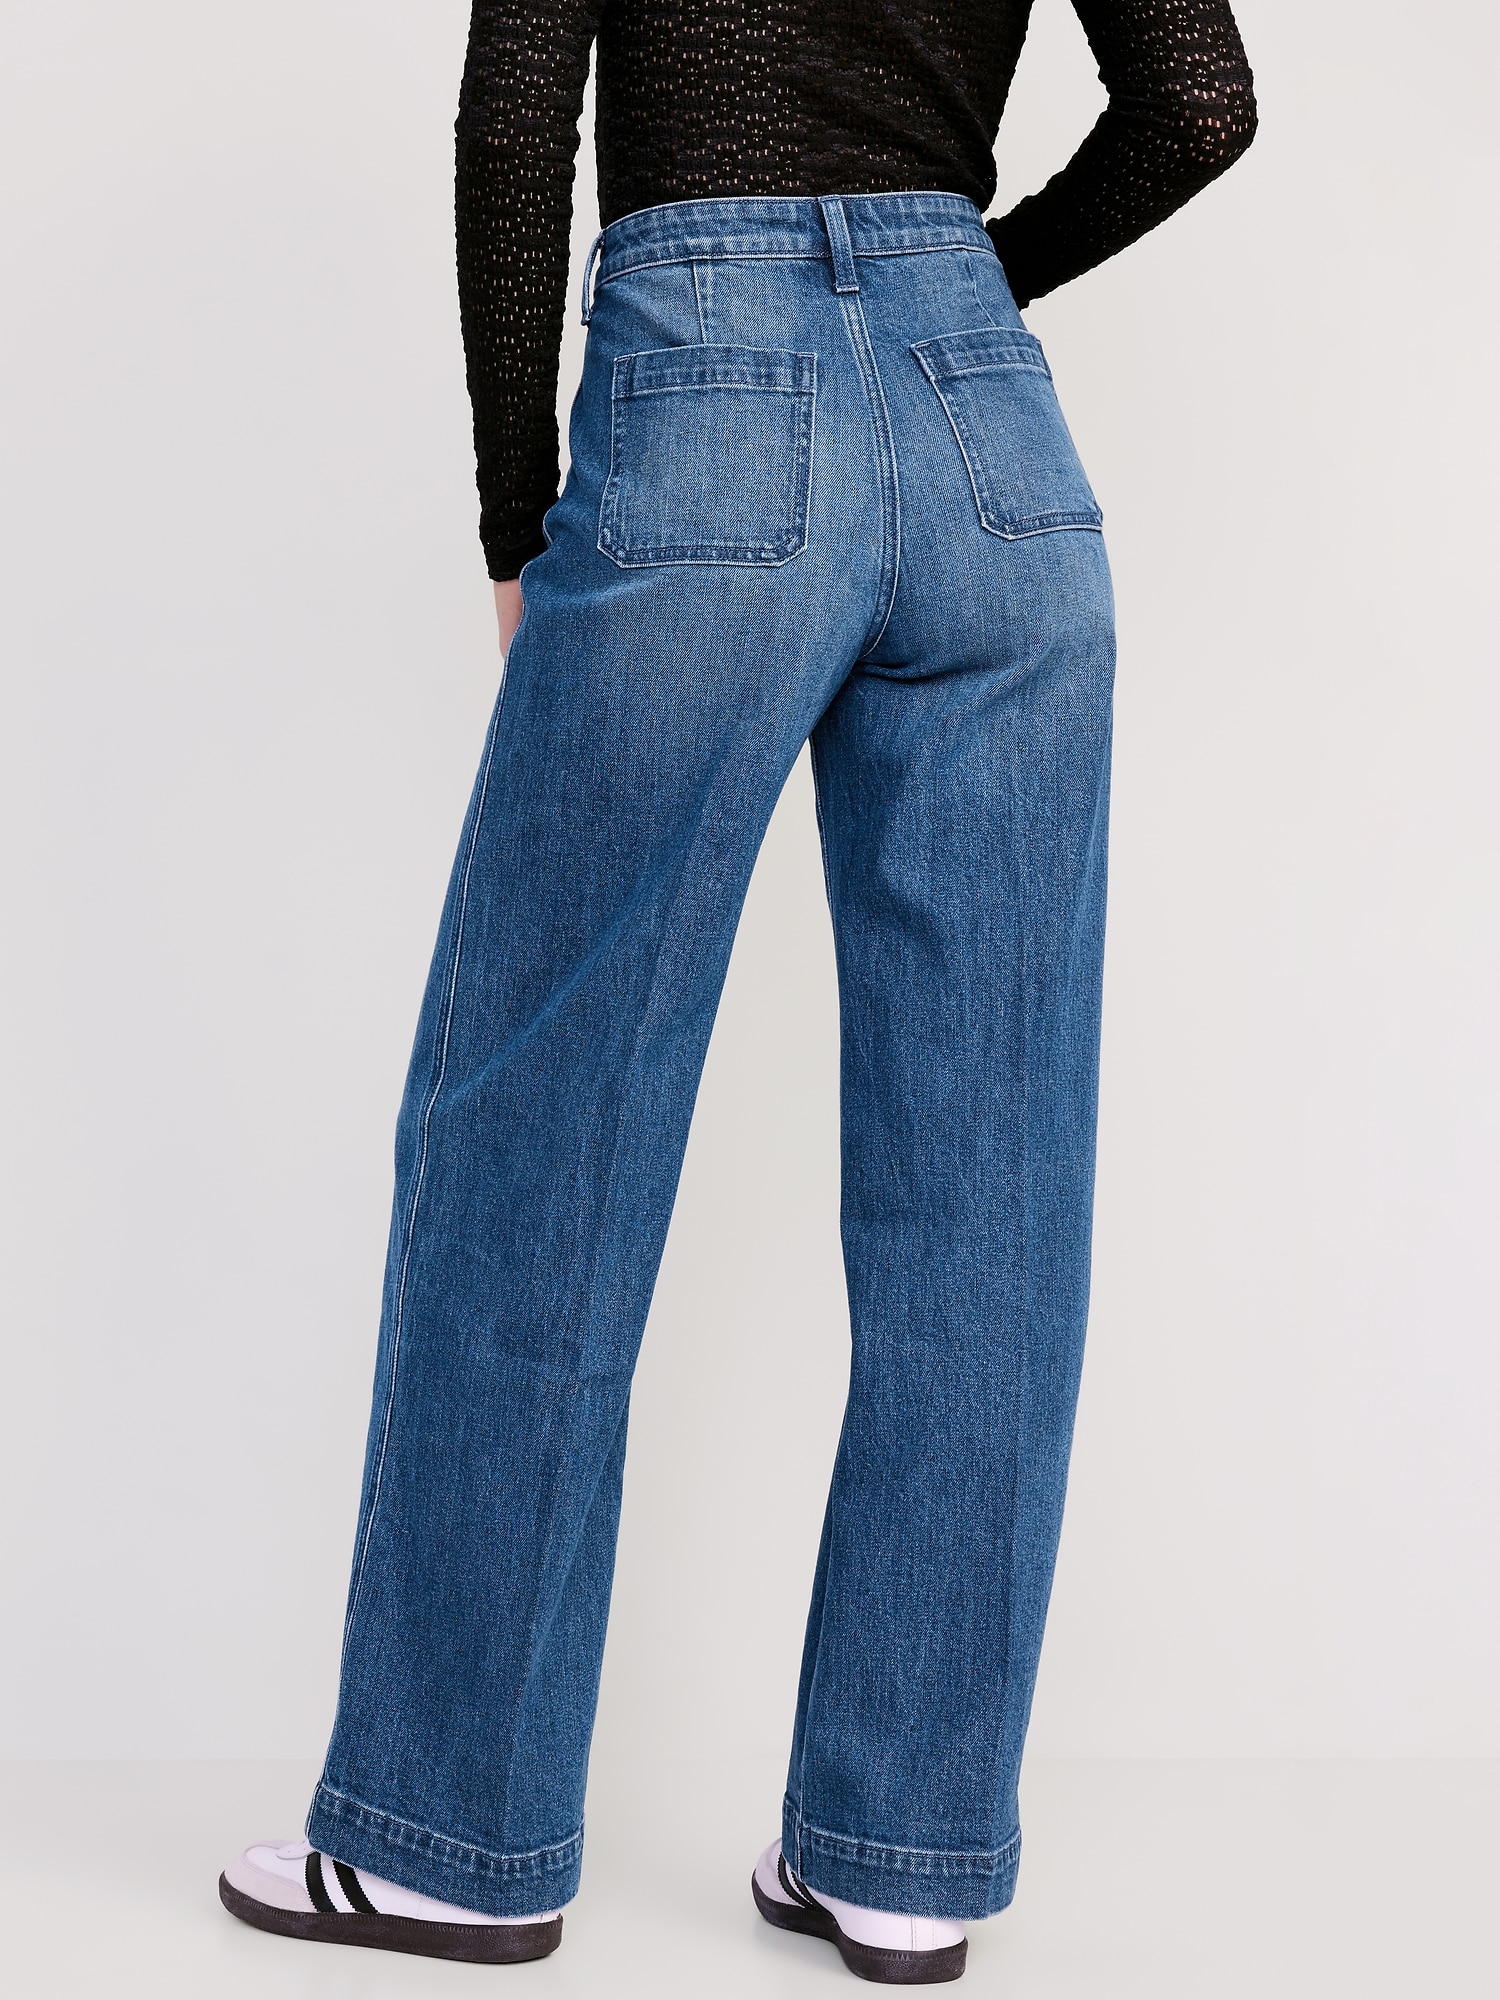 Gap Women Jeans|women's Ripped High Waist Jeans - Slim Fit Skinny Pencil  Pants